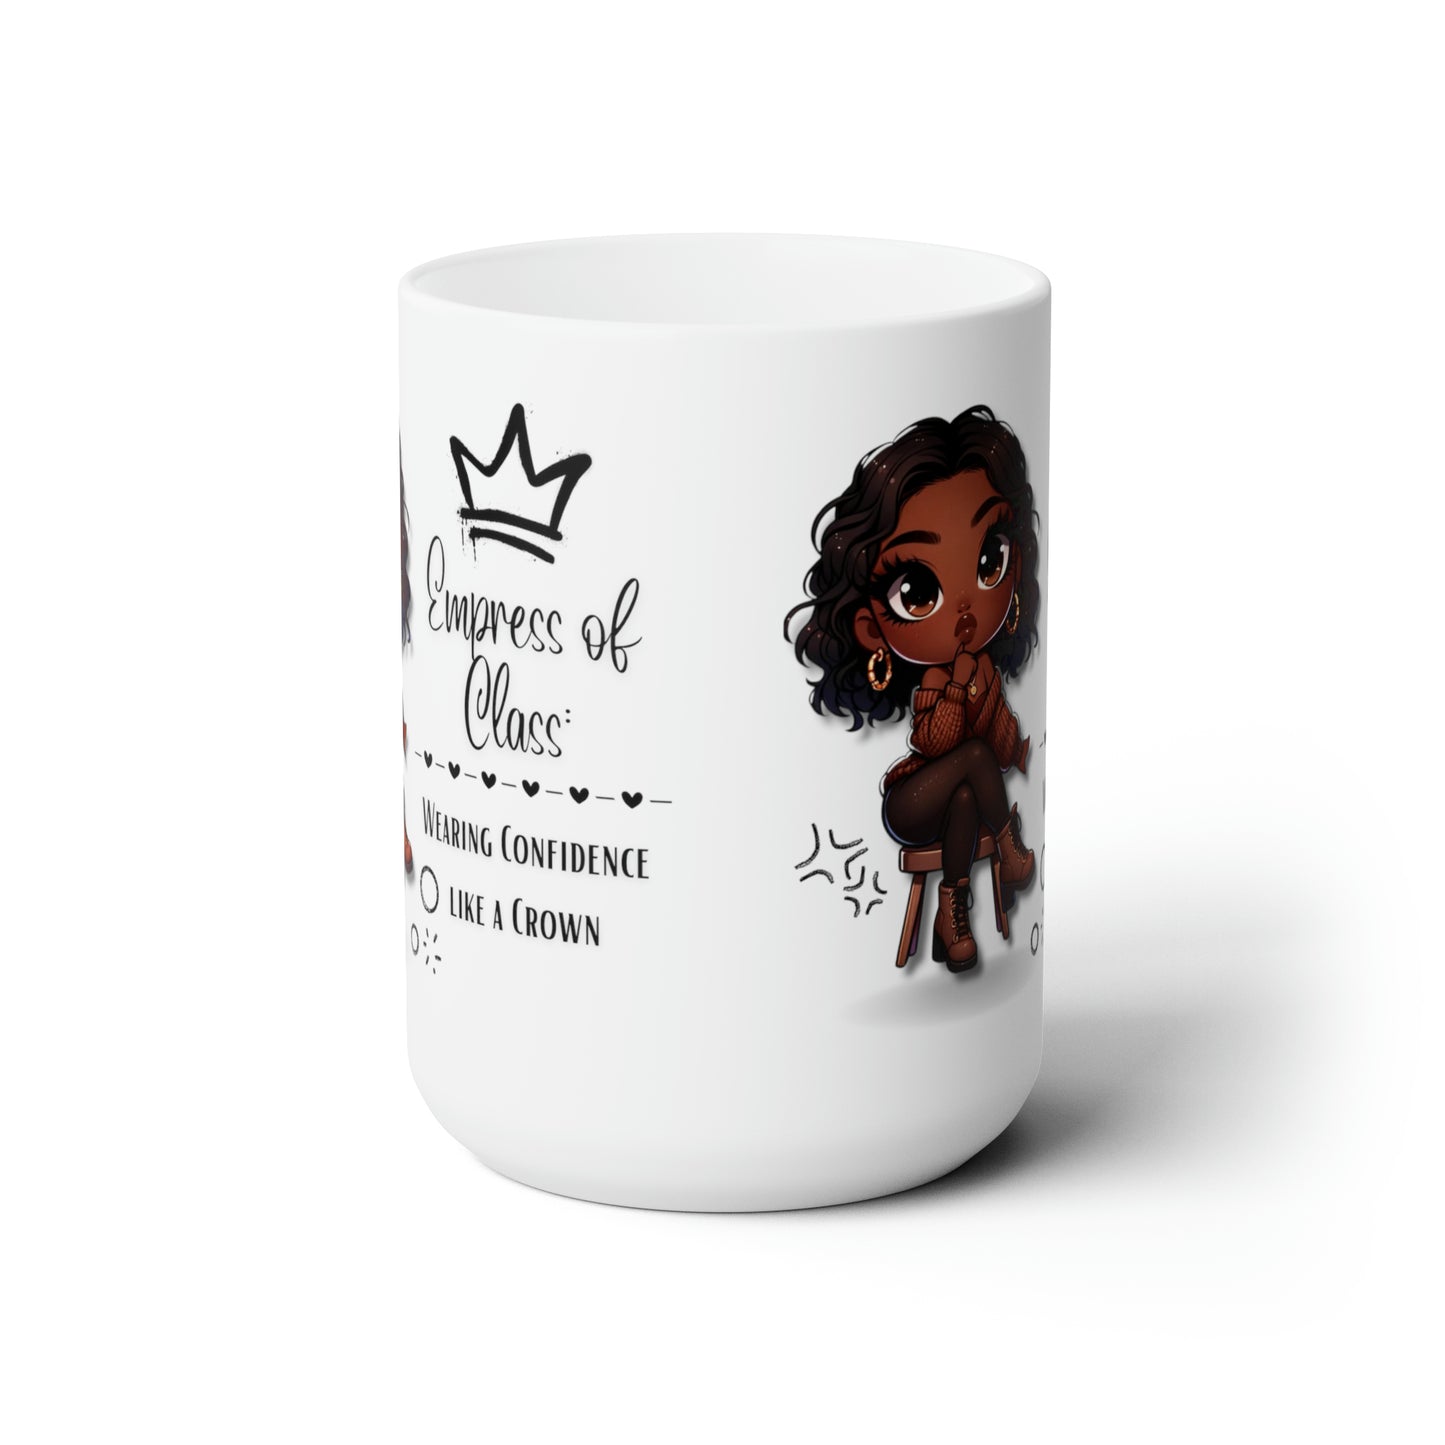 Empress of Class, Wearing Confidence Like a Crown Ceramic Mug 15oz